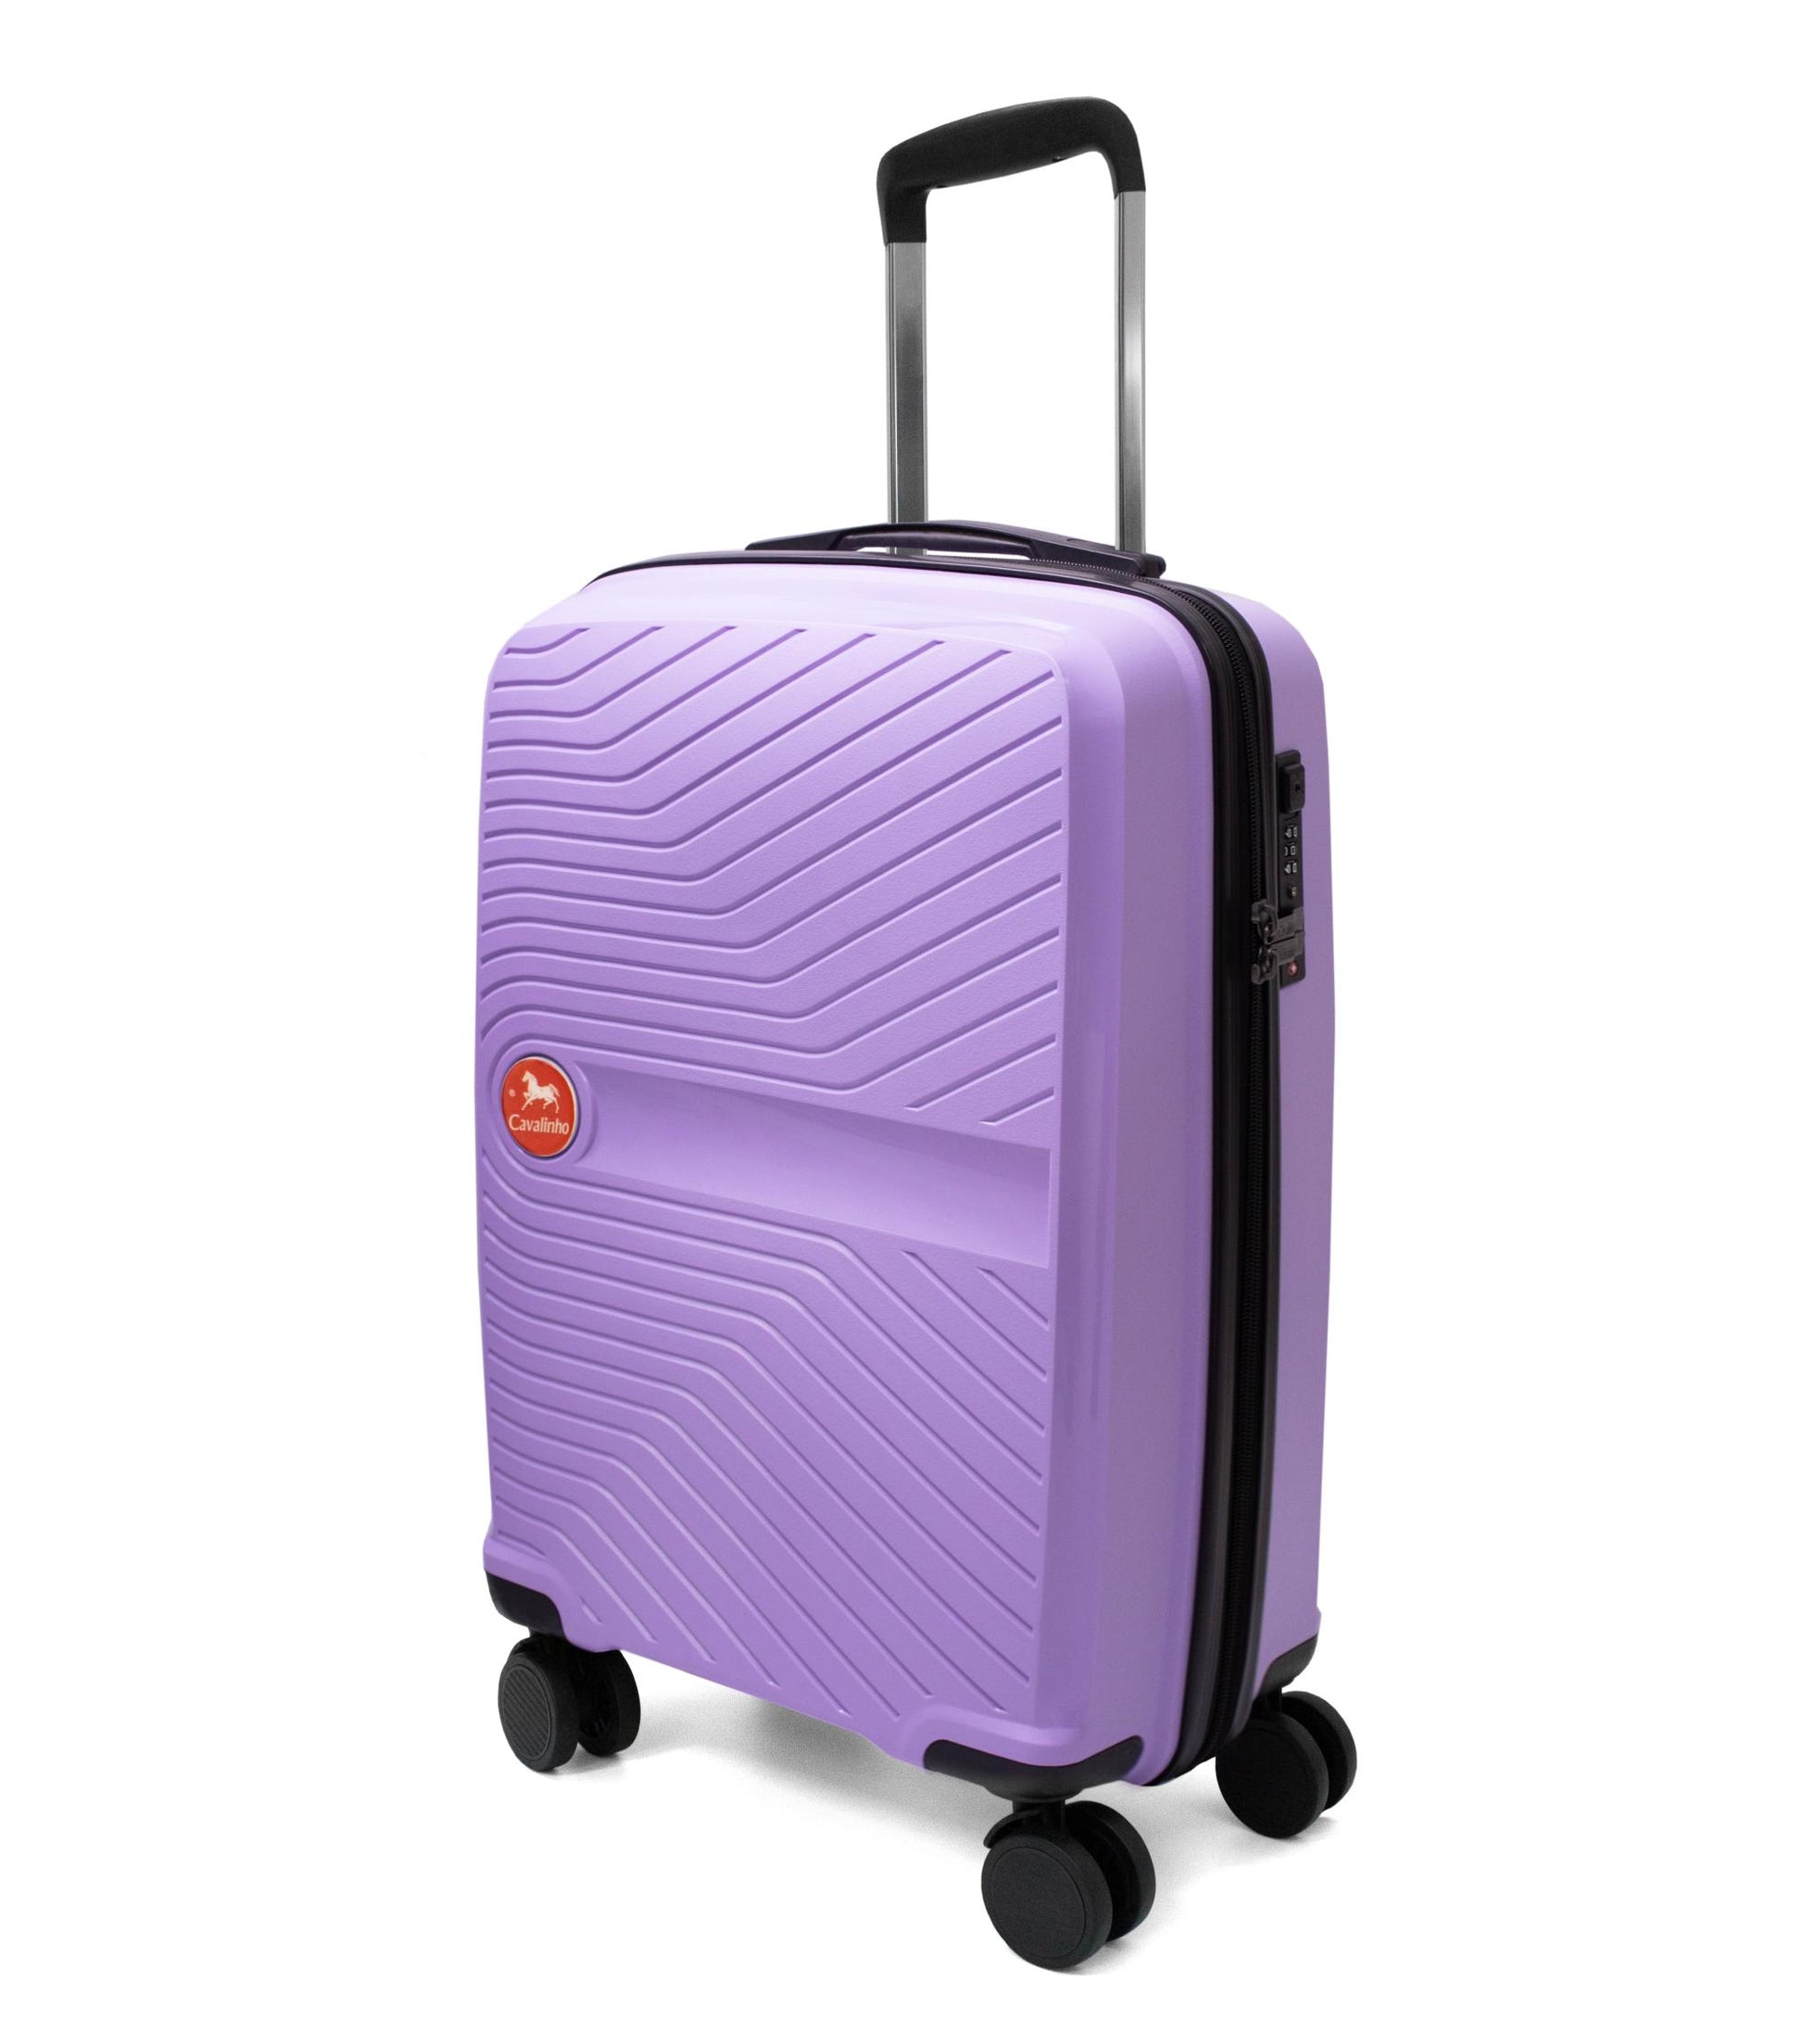 Cavalinho Colorful Carry-on Hardside Luggage (19") - 19 inch Lilac - 68020004.39.19_2